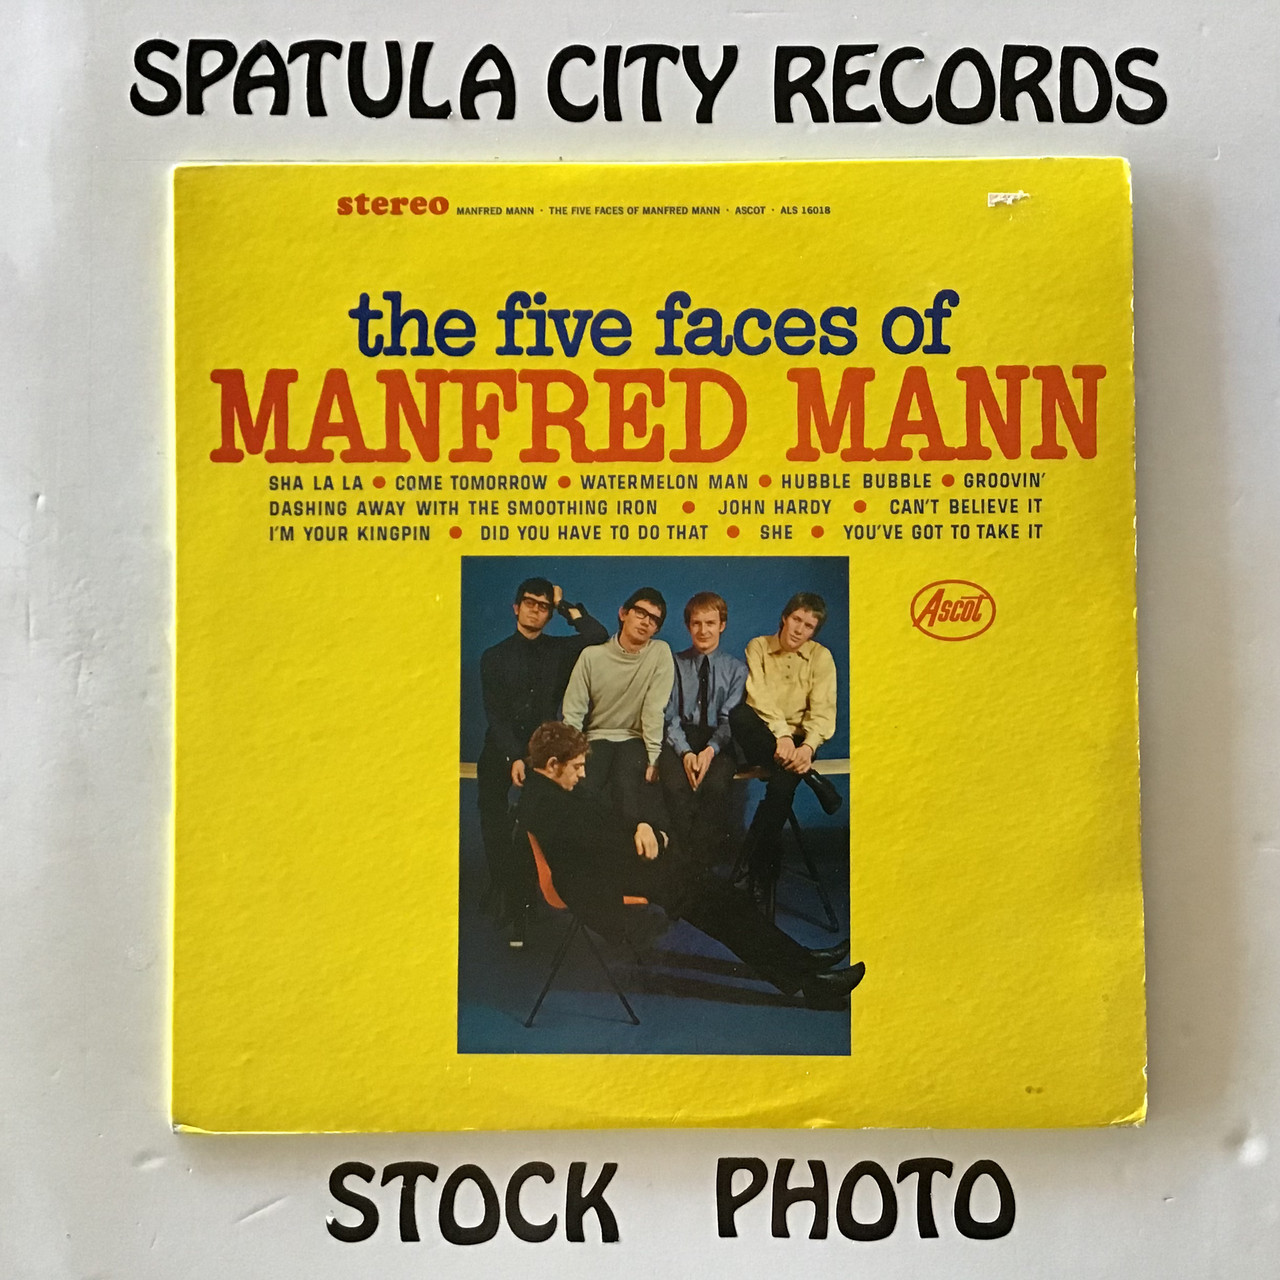 Manfred Mann - The Five Faces of Manfred Mann featuring Sha-La-La - vinyl record LP